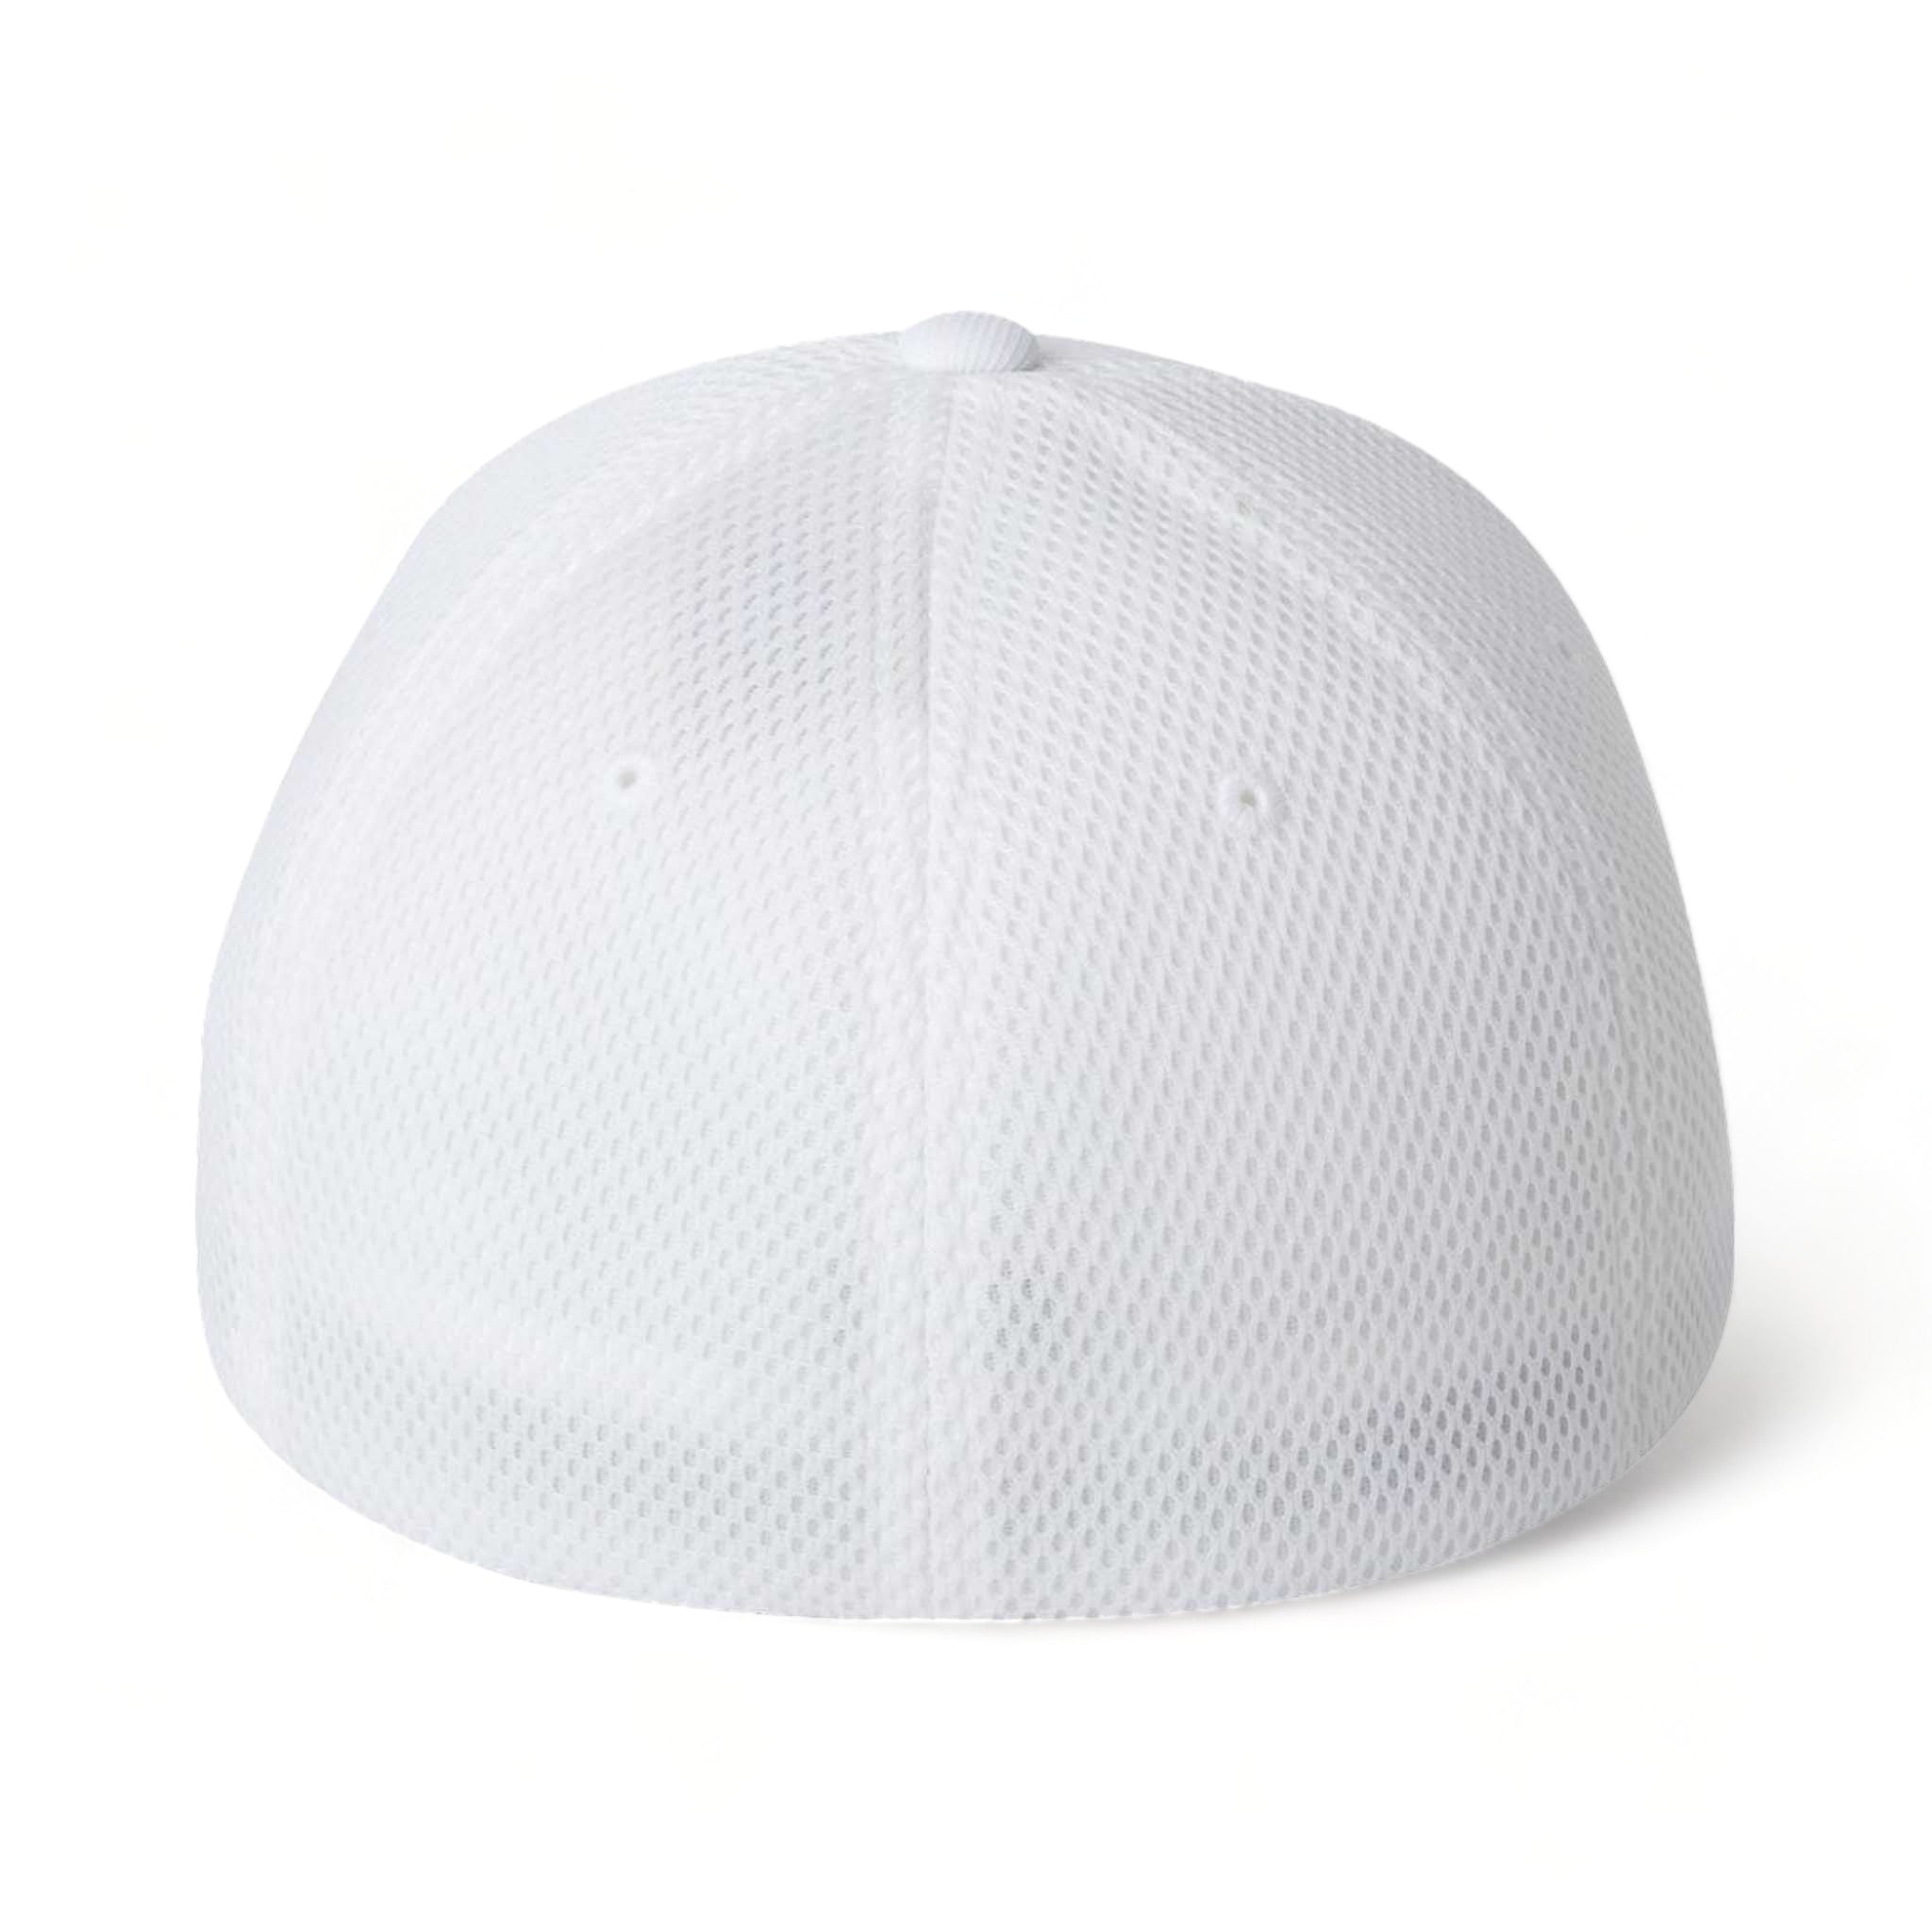 Back view of Flexfit 6533 custom hat in white